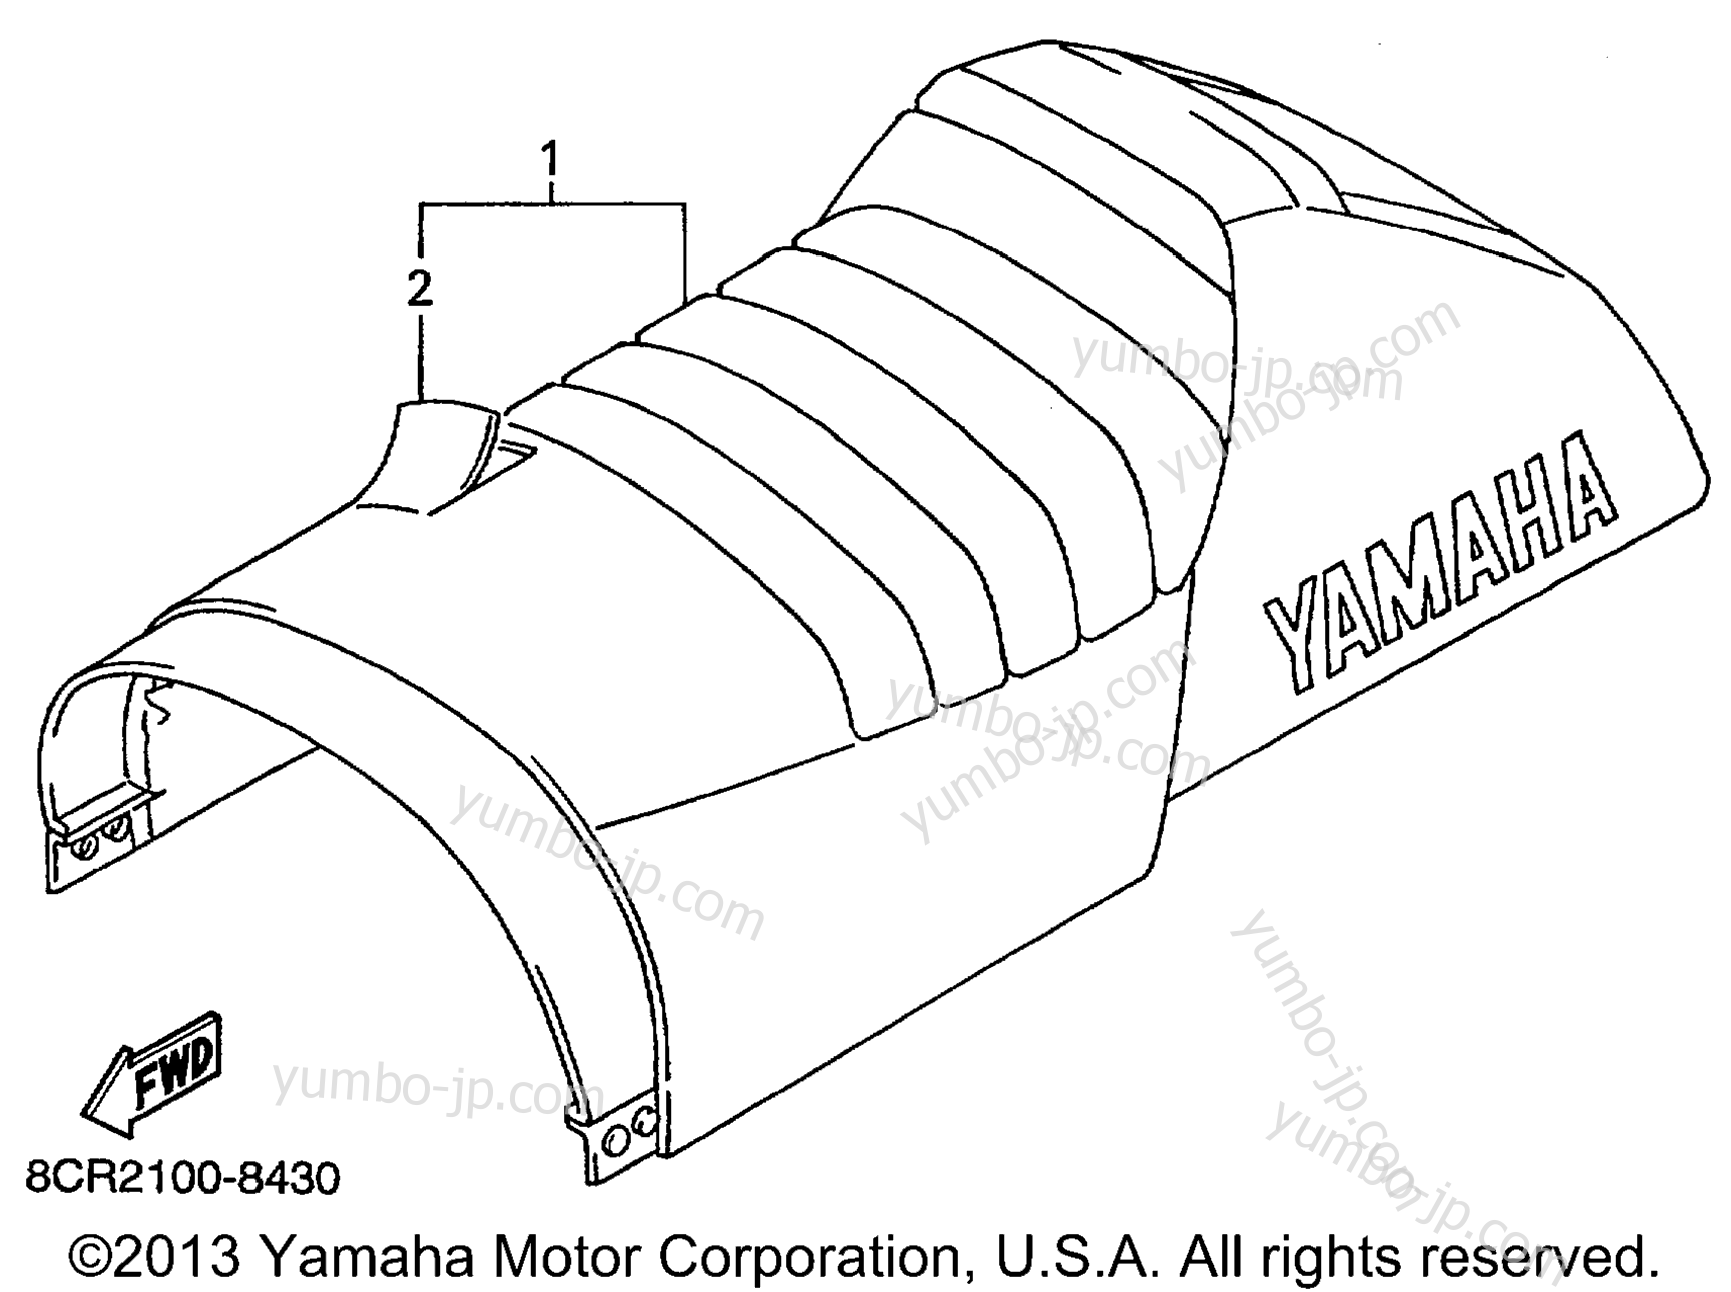 Alternate Body Rig 3 для снегоходов YAMAHA VMAX 600 DELUXE (ELEC START) (VX600ERC) 1999 г.